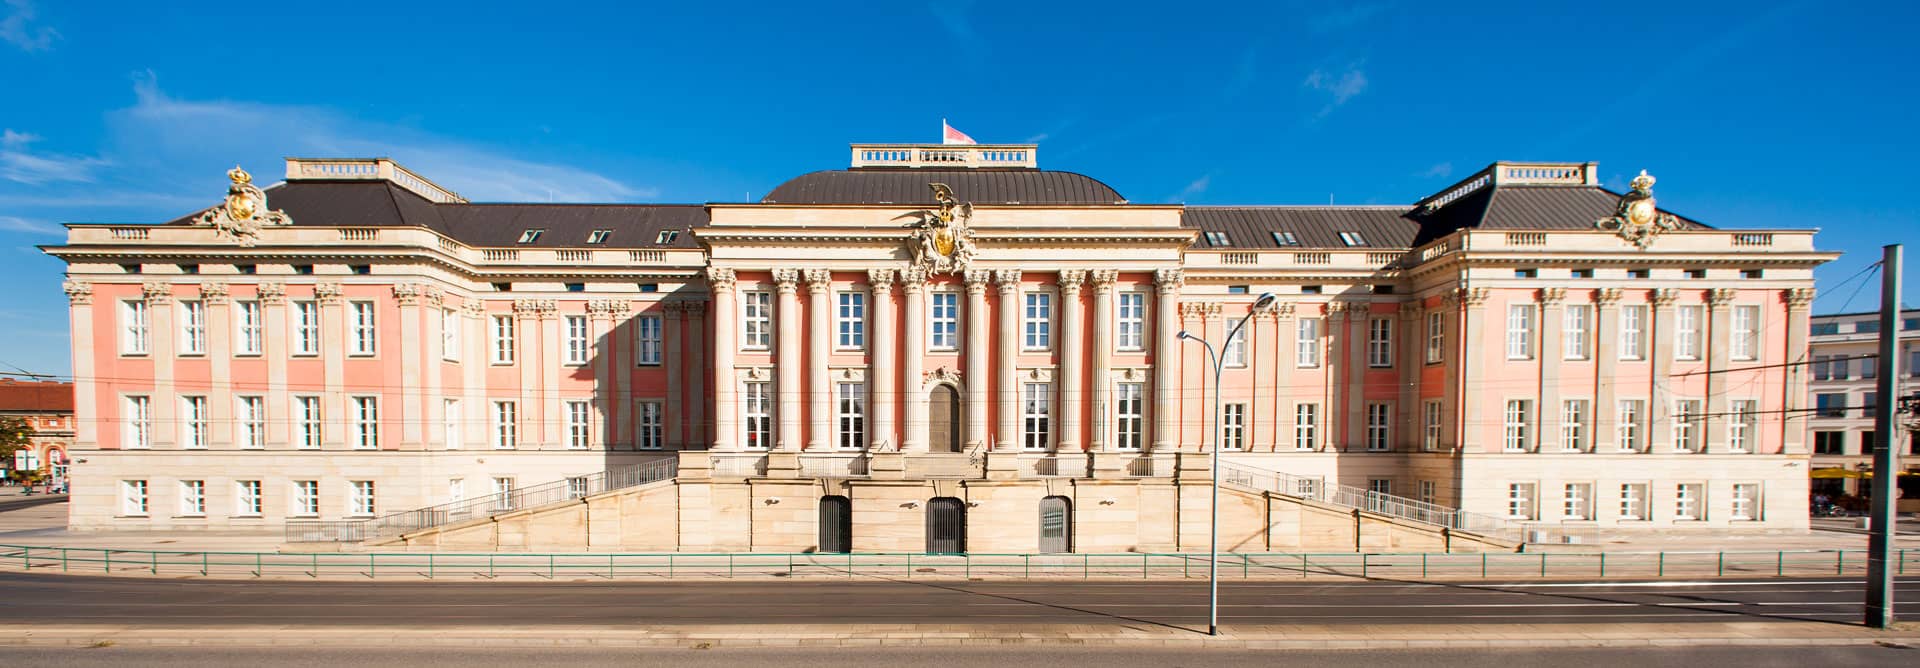 Landtag_Potsdam_01_1